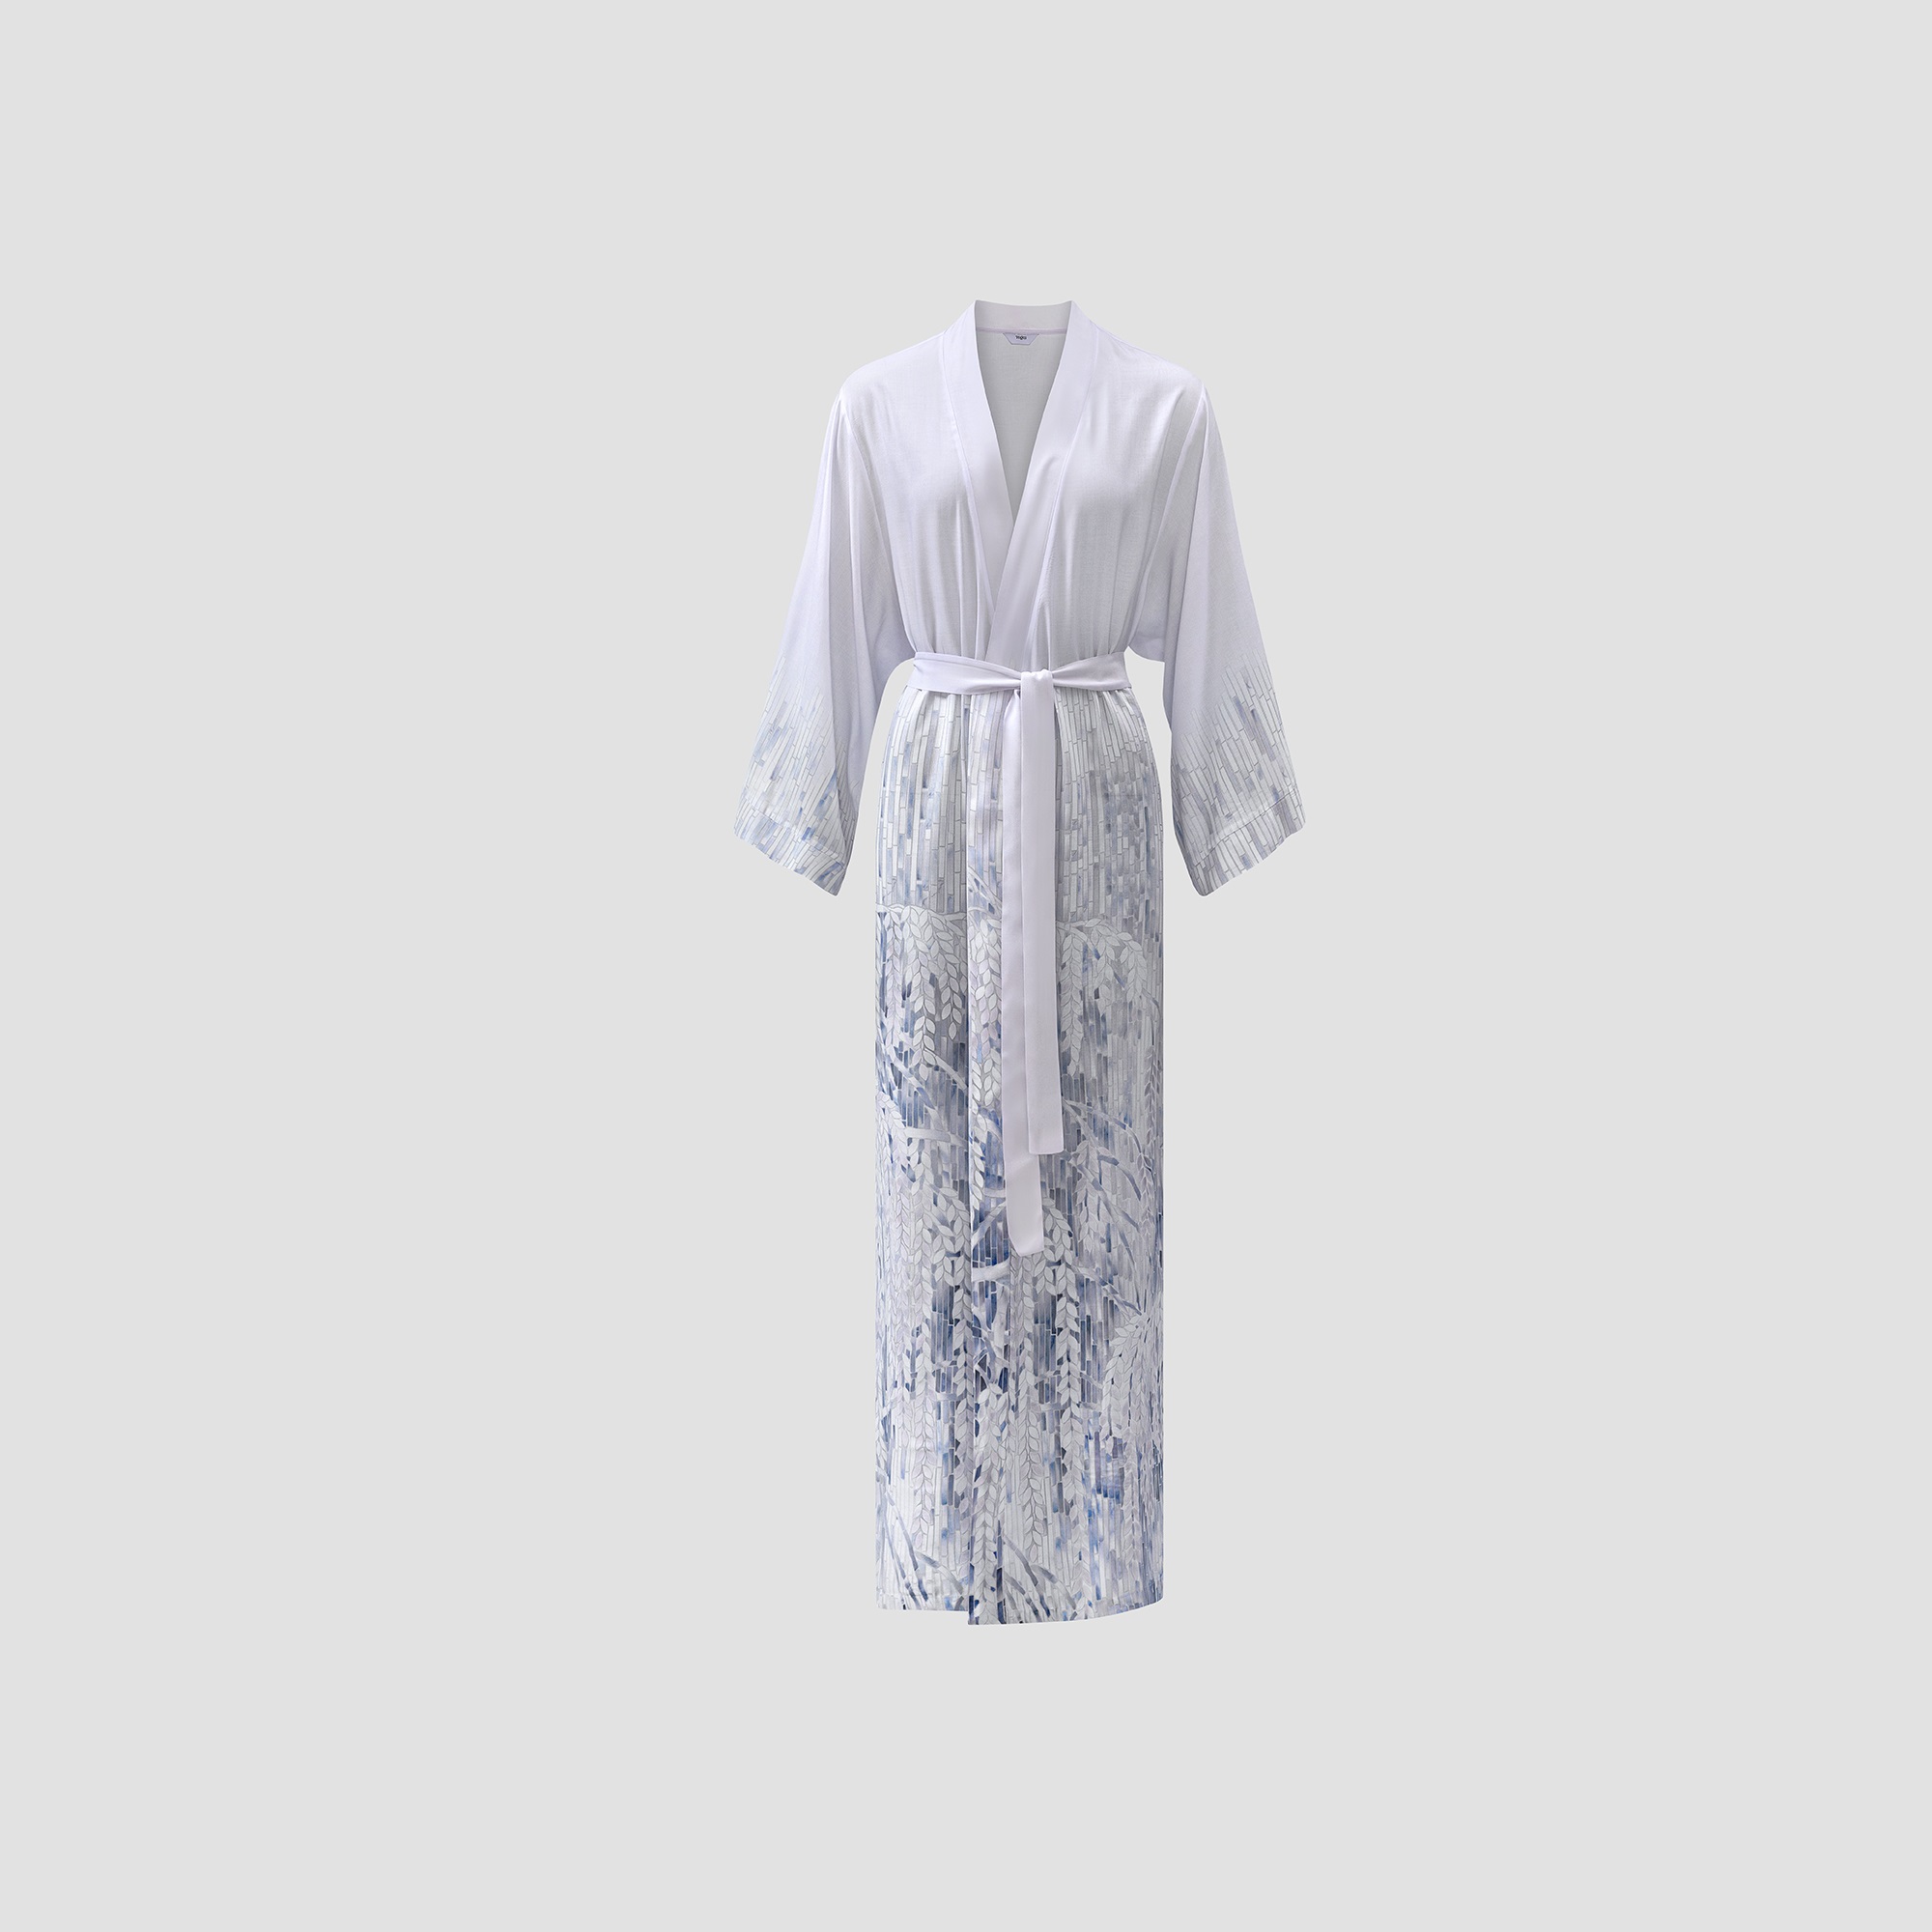 Кимоно Togas Вилонна бело-синее L(48) платье кимоно